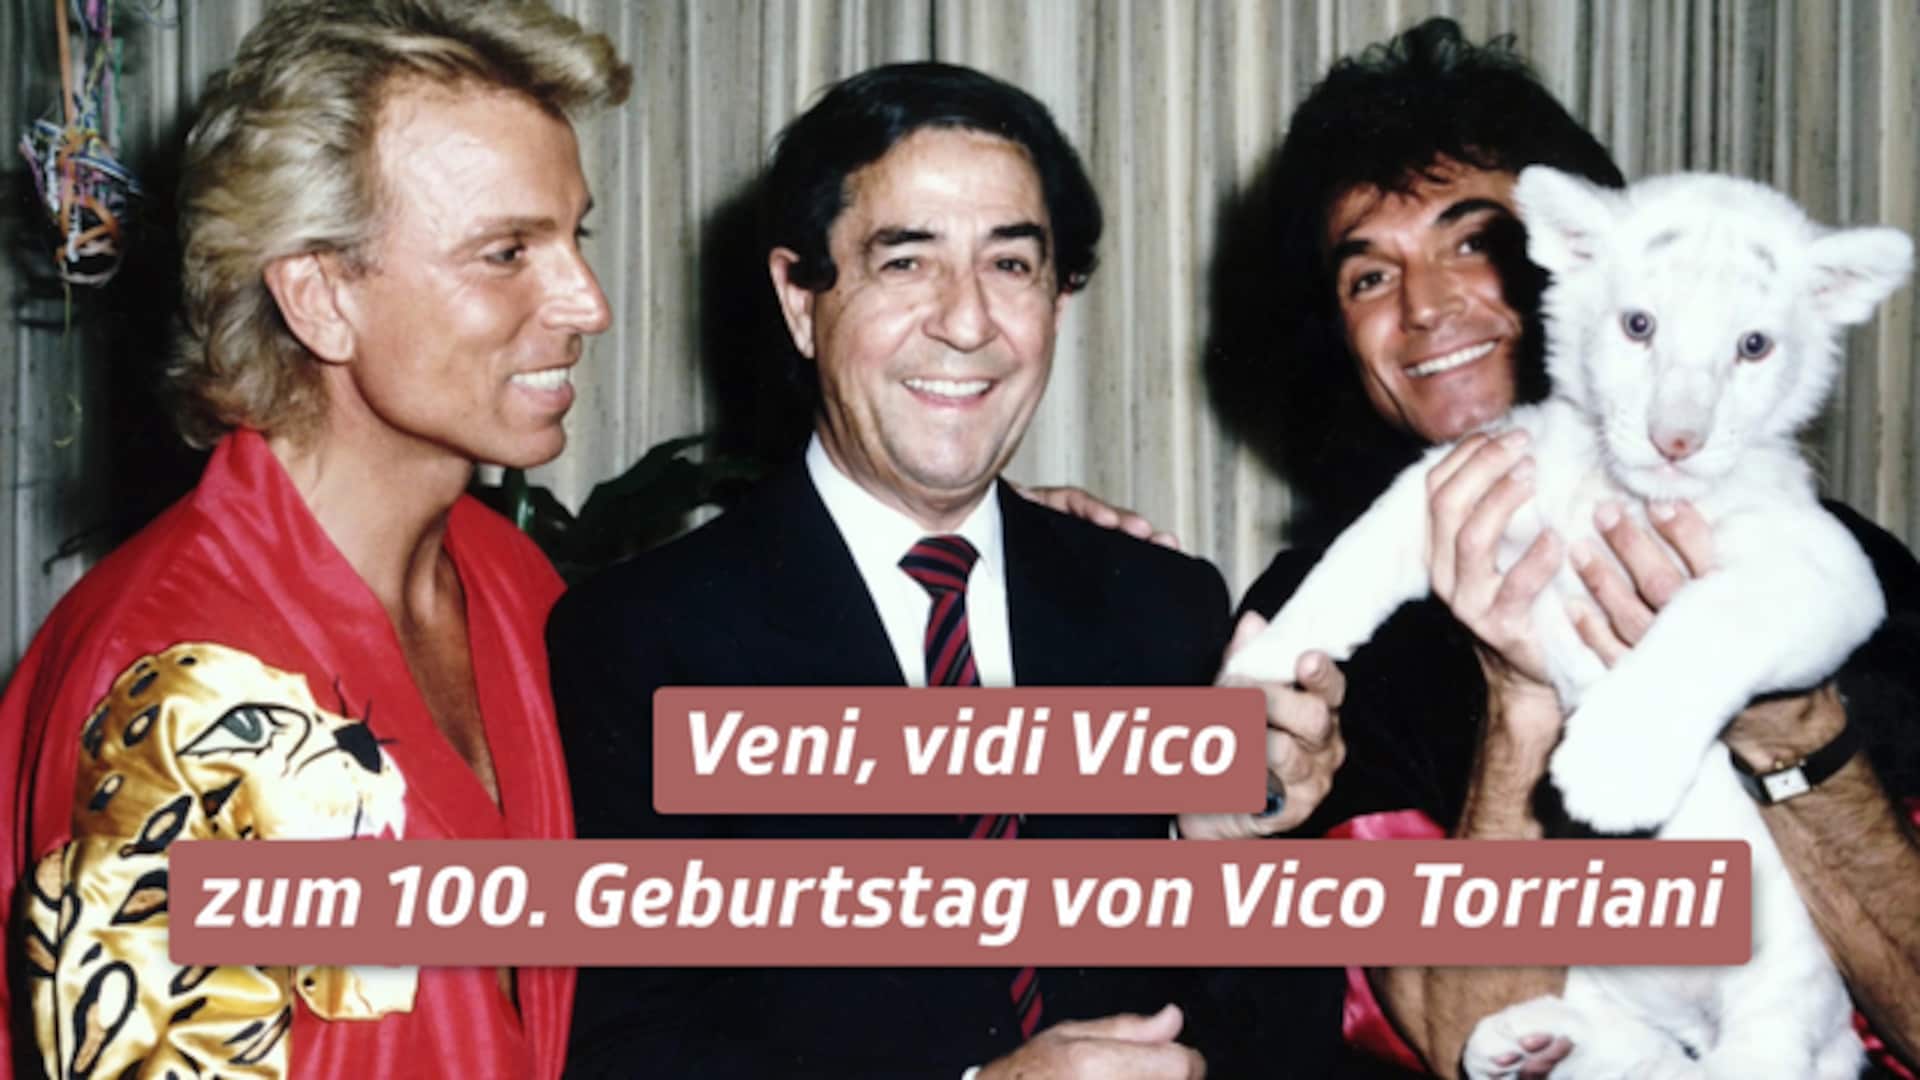 Veni, vidi Vico – zum 100. Geburtstag von Vico Torriani